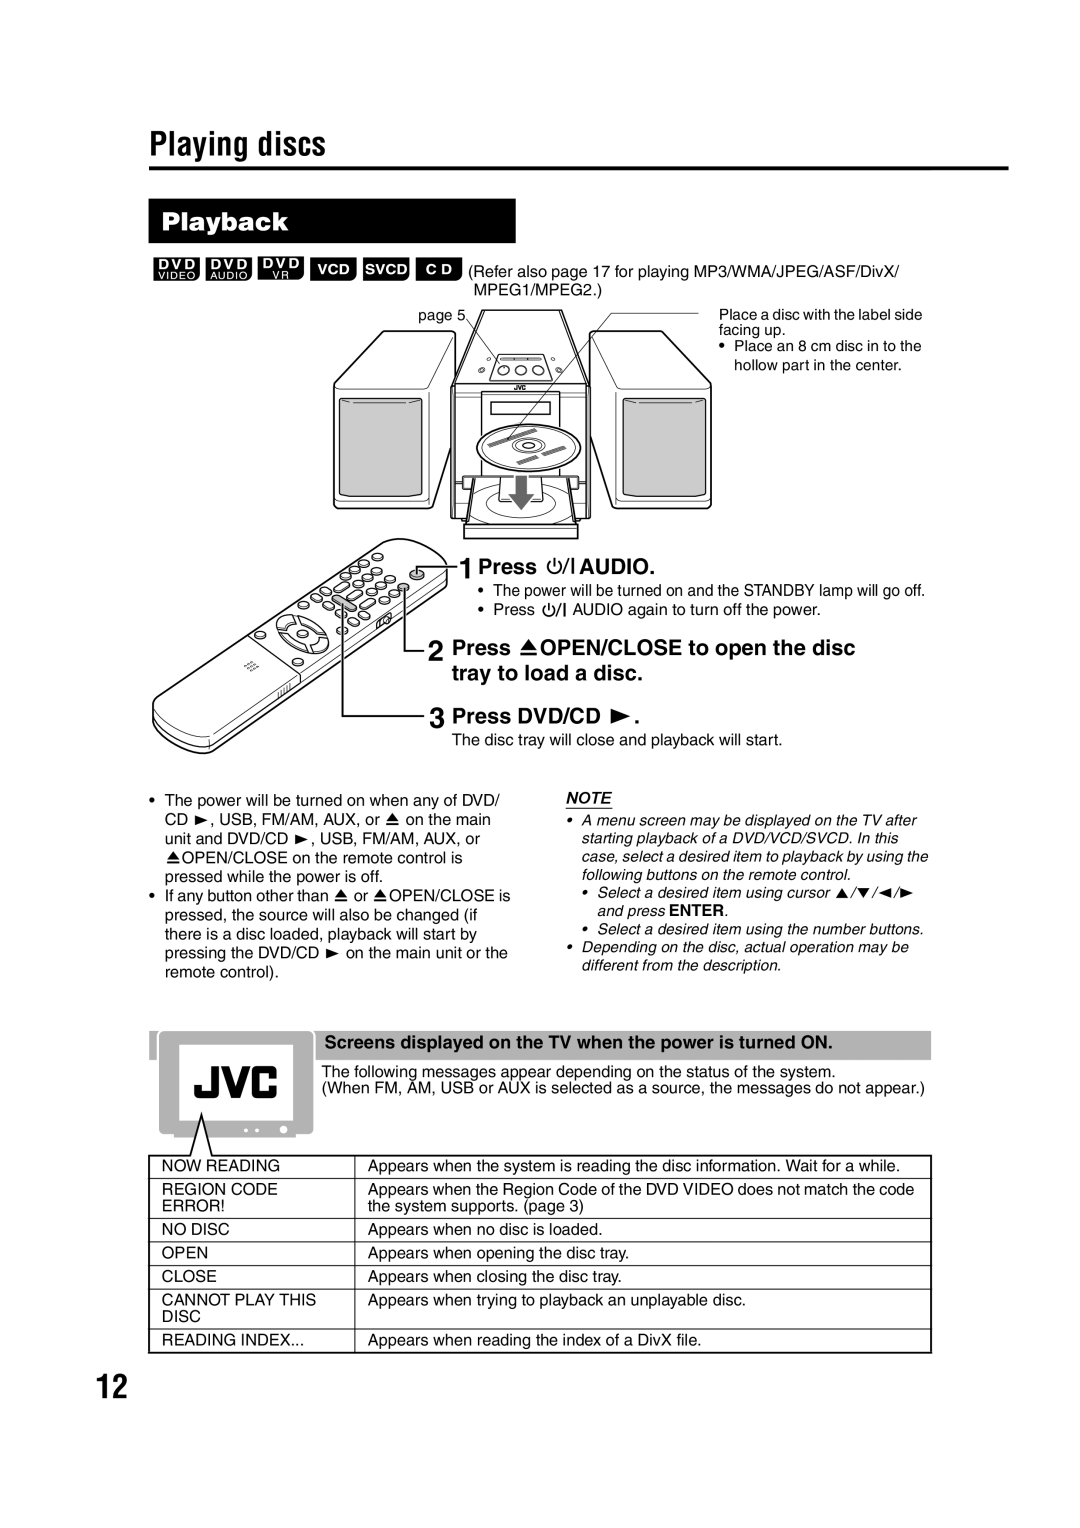 JVC GNT0066-001A manual Playing discs, Playback, Press AUDIO, Press DVD/CD 